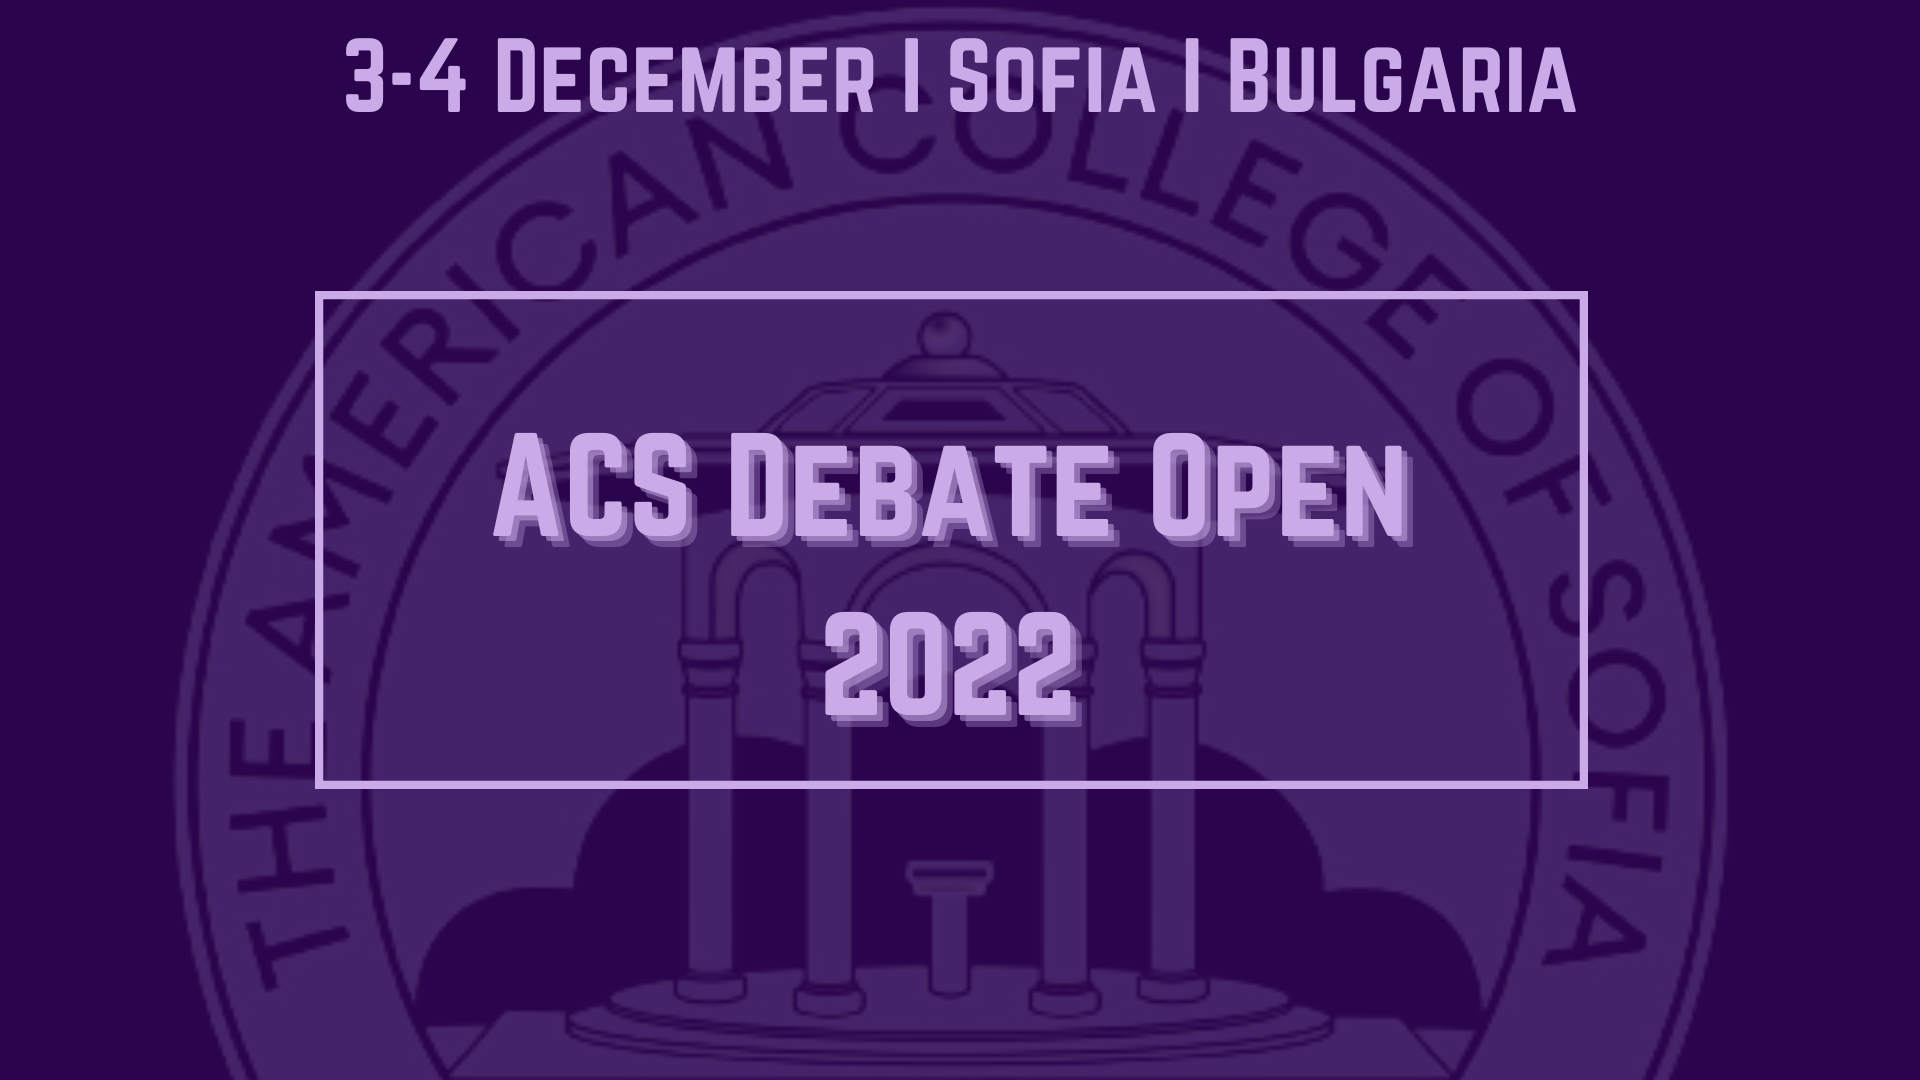 ACS Debate Open 2022 ACS